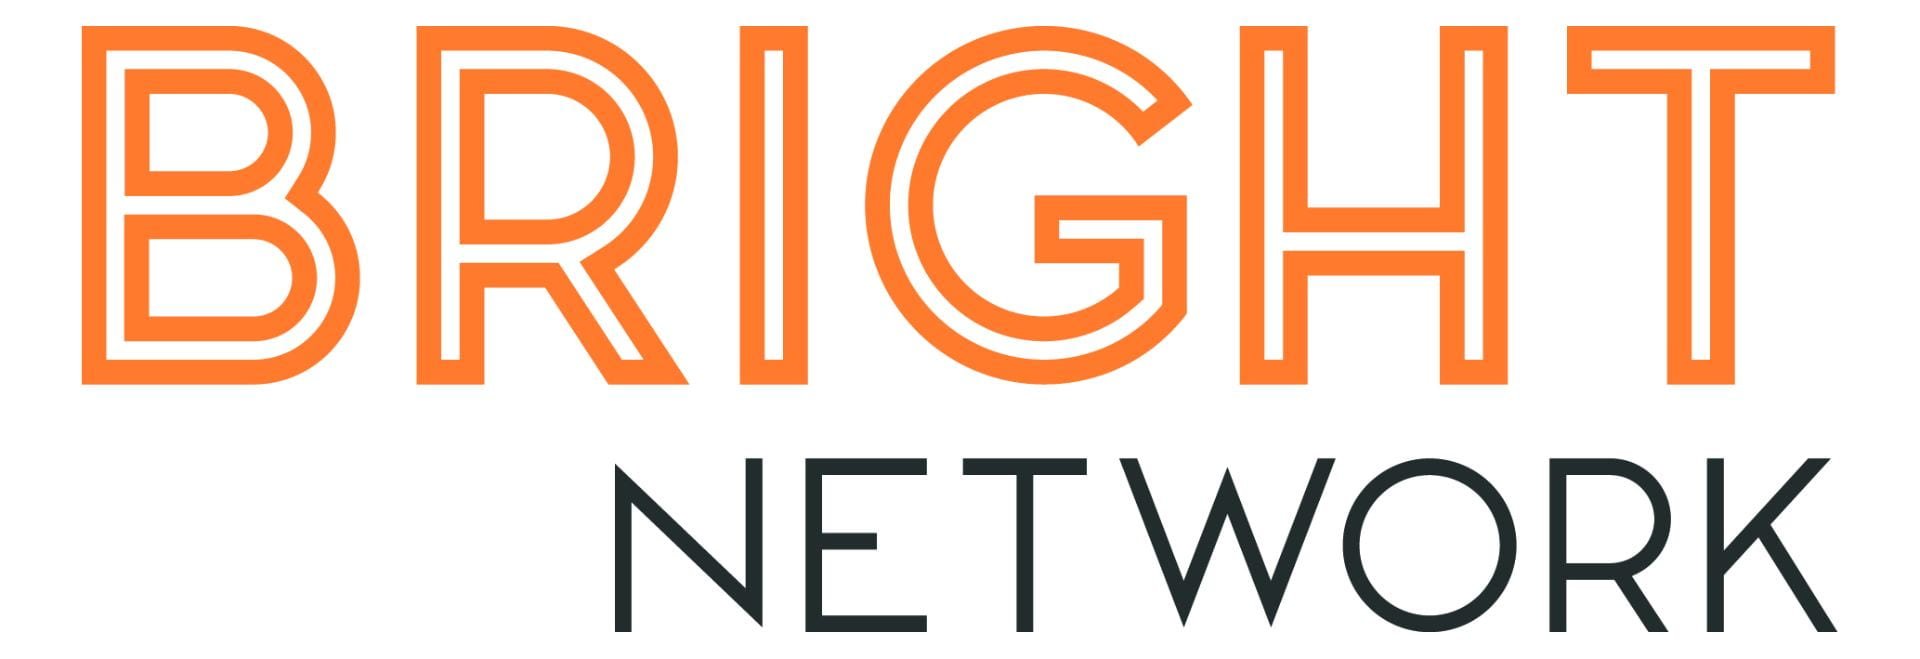 BRIGHT NETWORK 2 logo-1